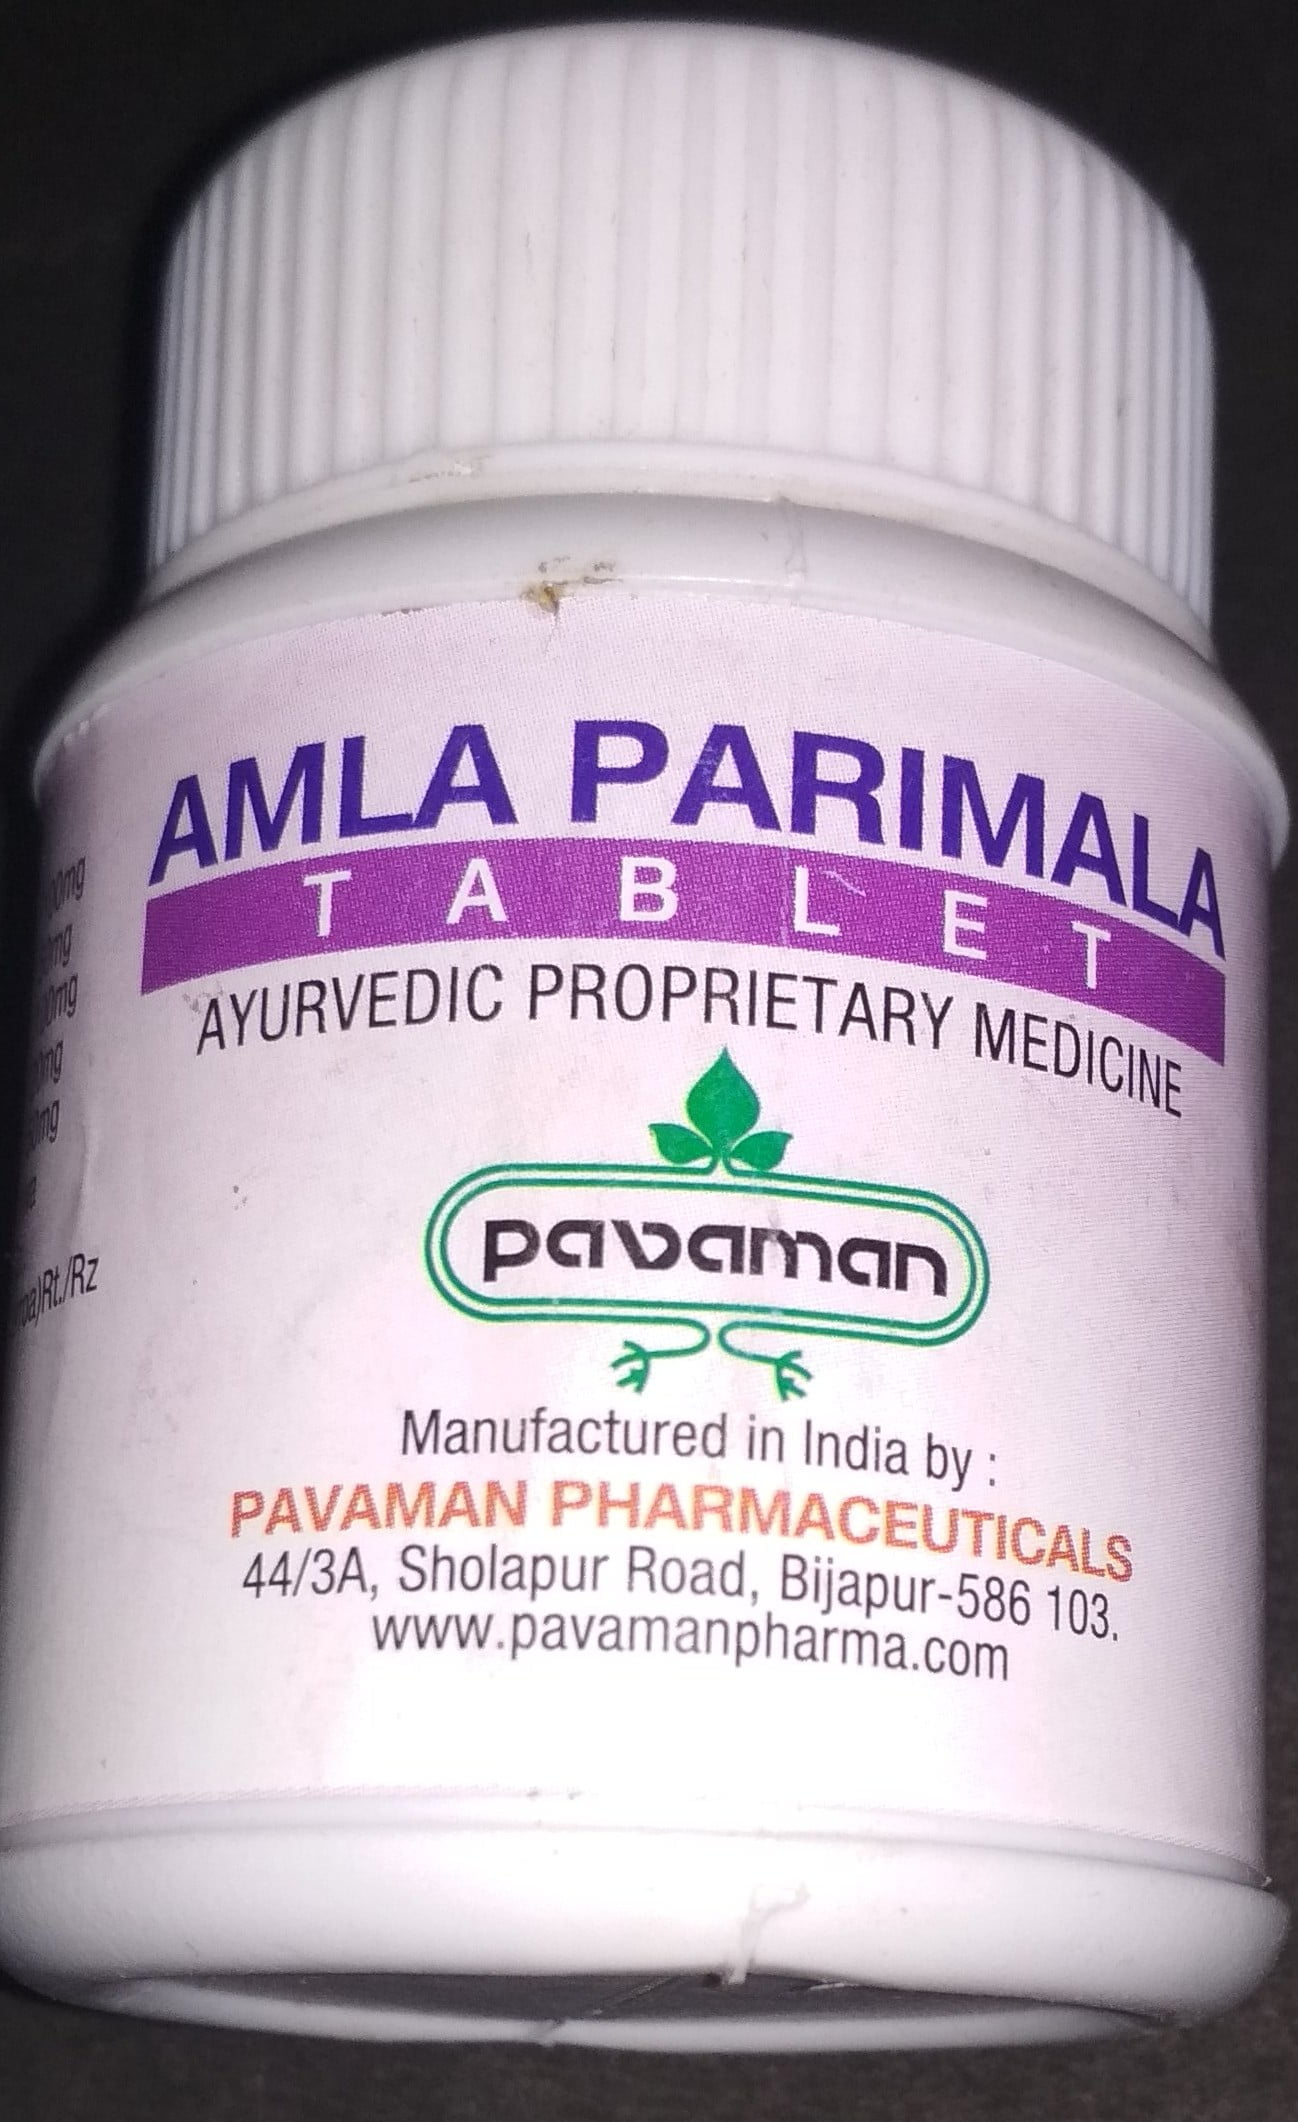 amla parimala tablet 500tab upto 20% off free shipping pavaman pharmaceuticals